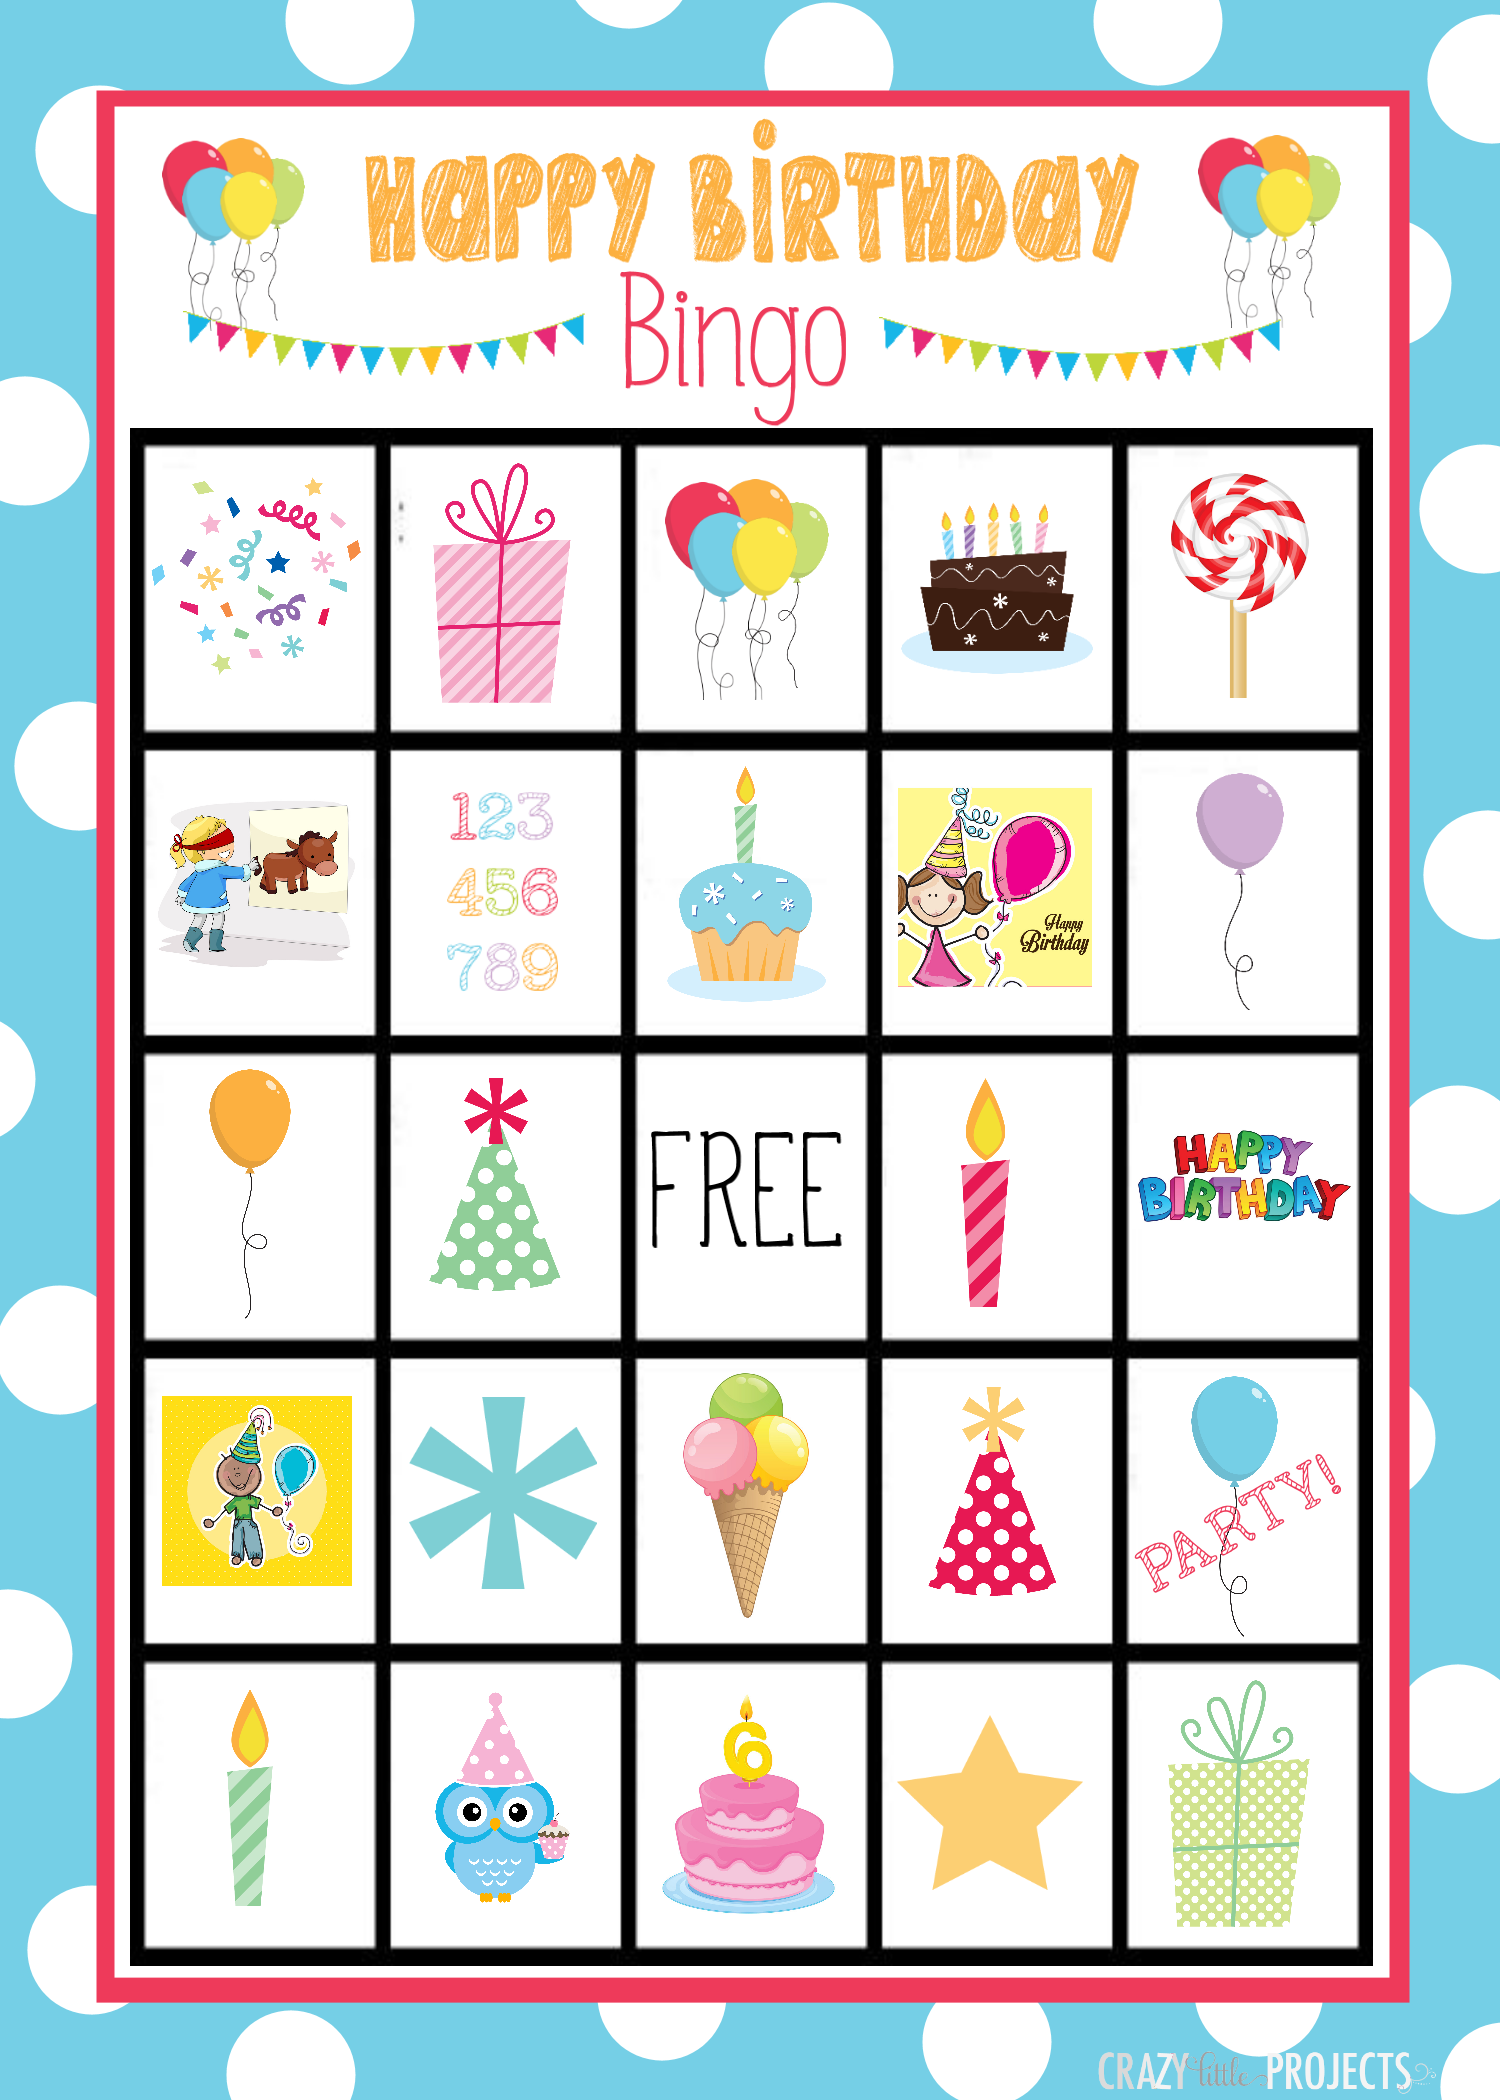 Birthday Bingo Cards - Crazy Little Projects
